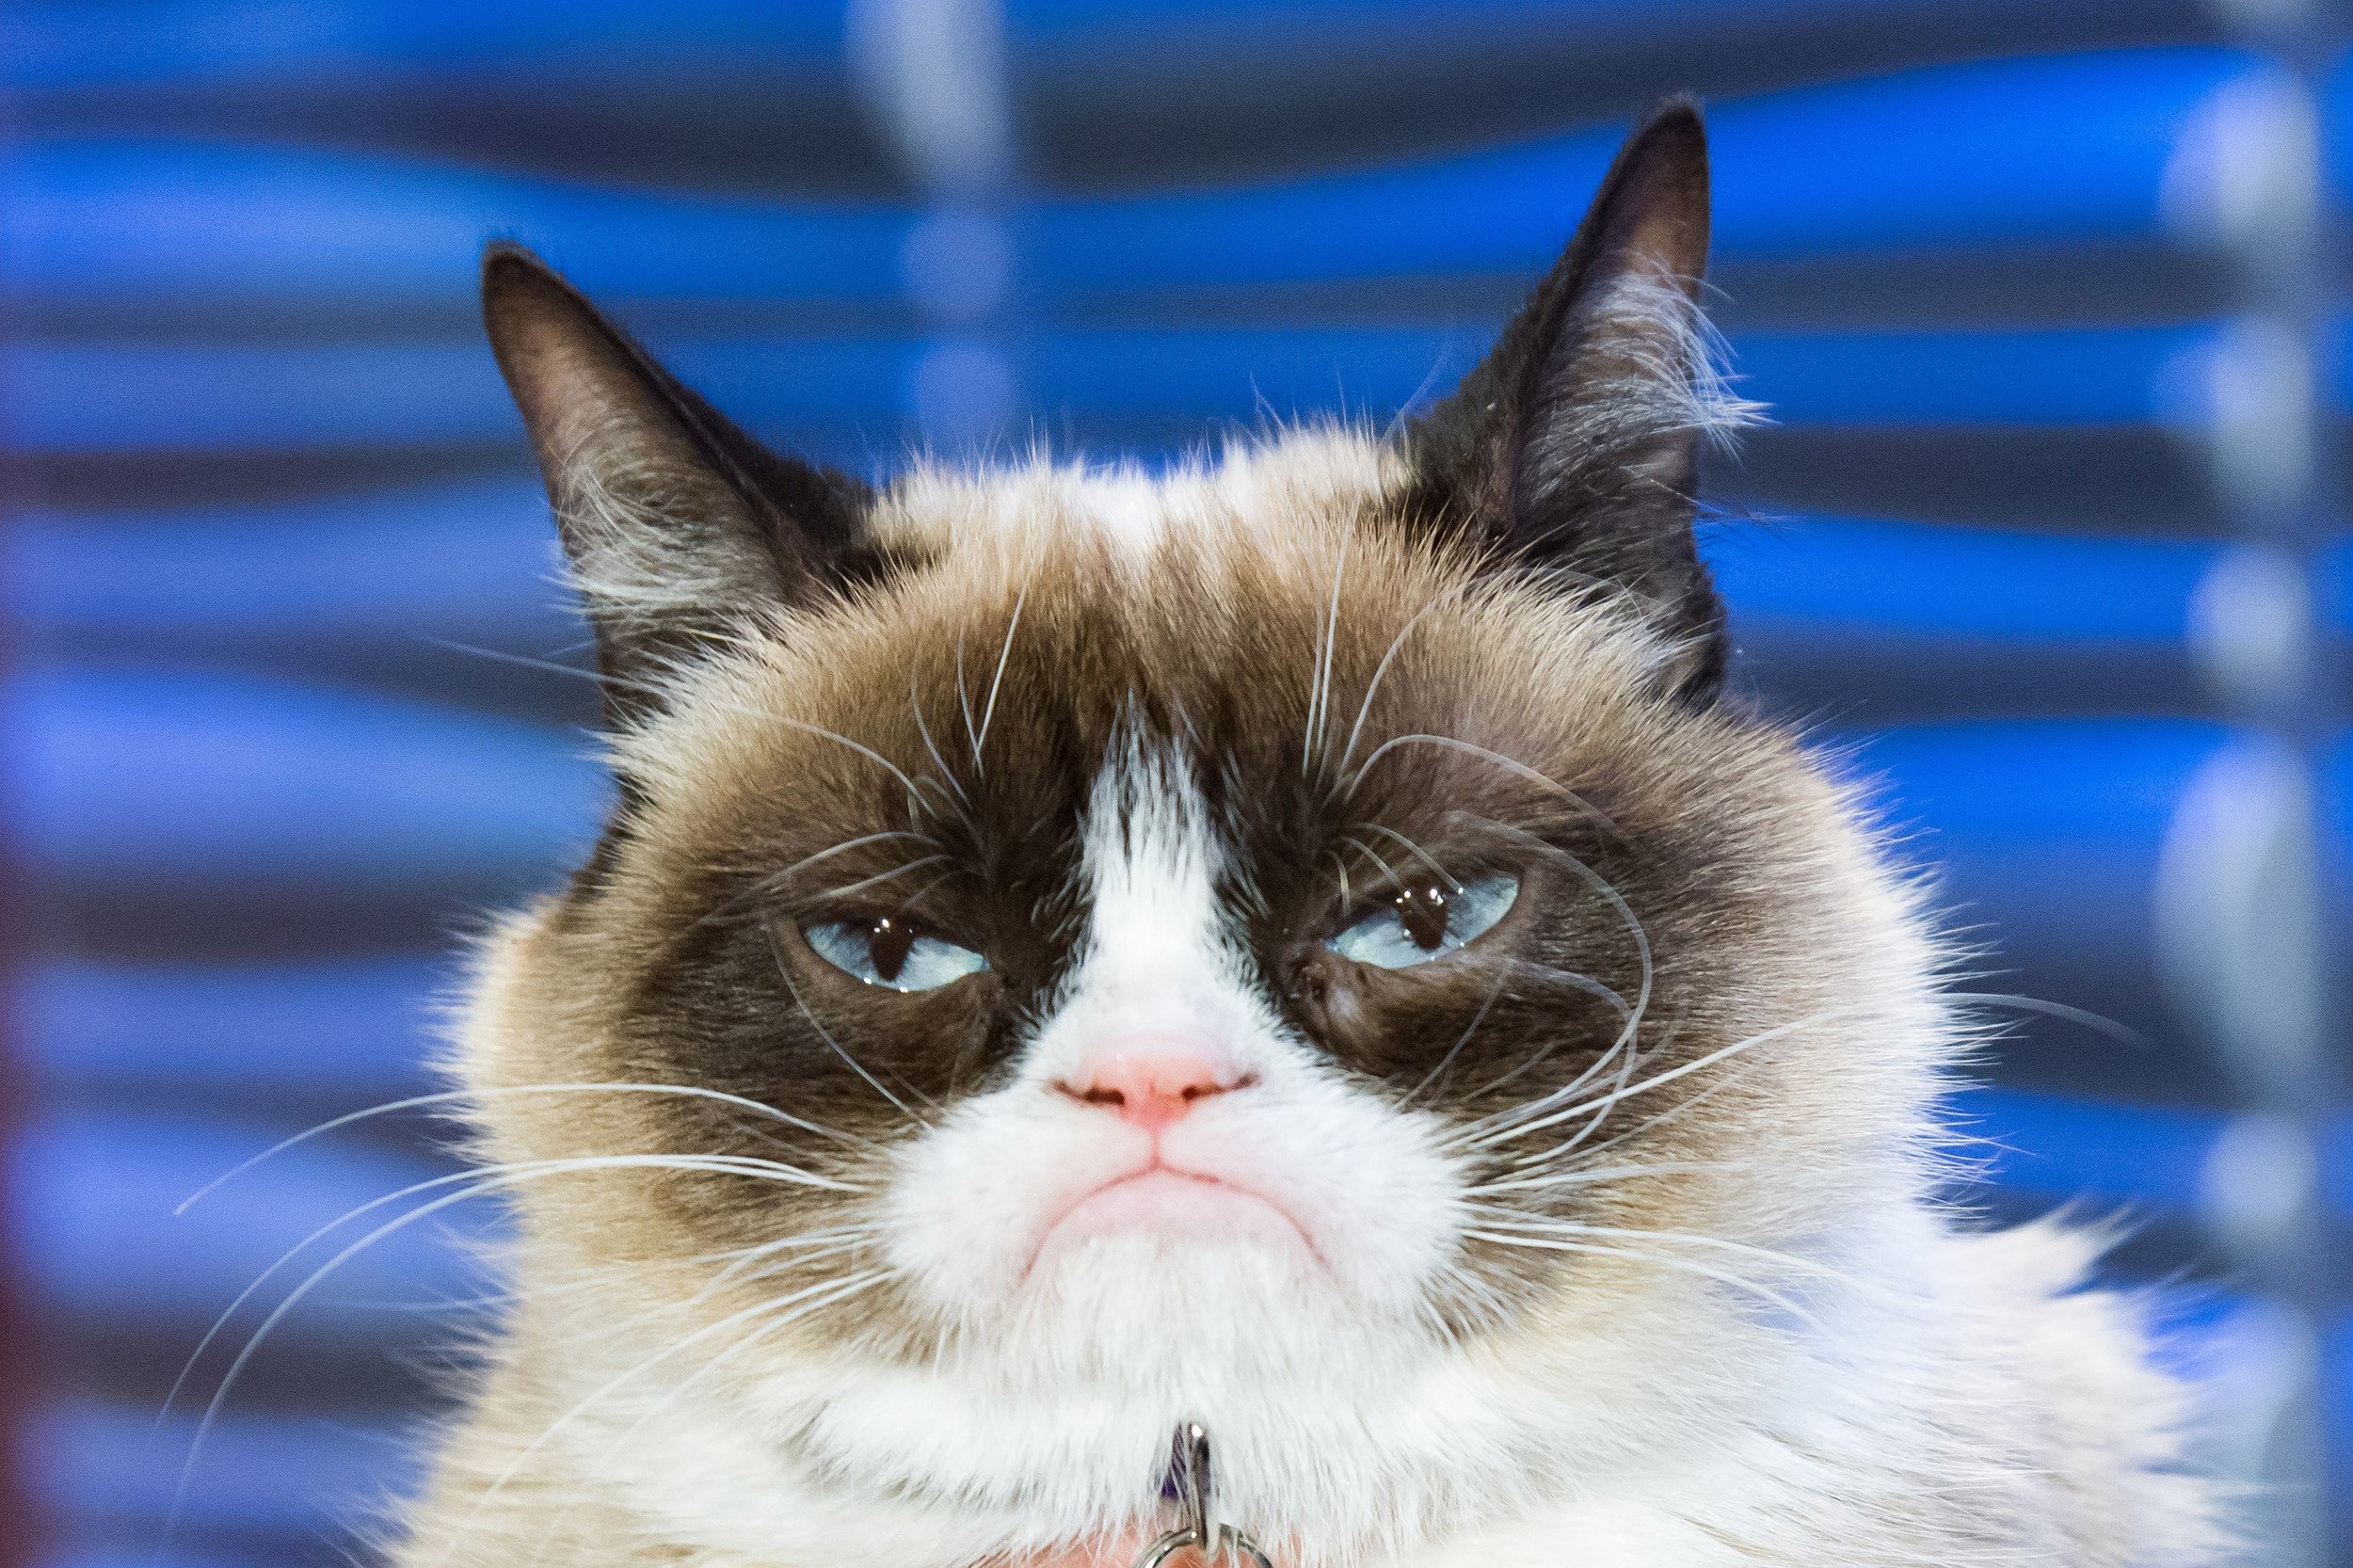 Grumpy Cat